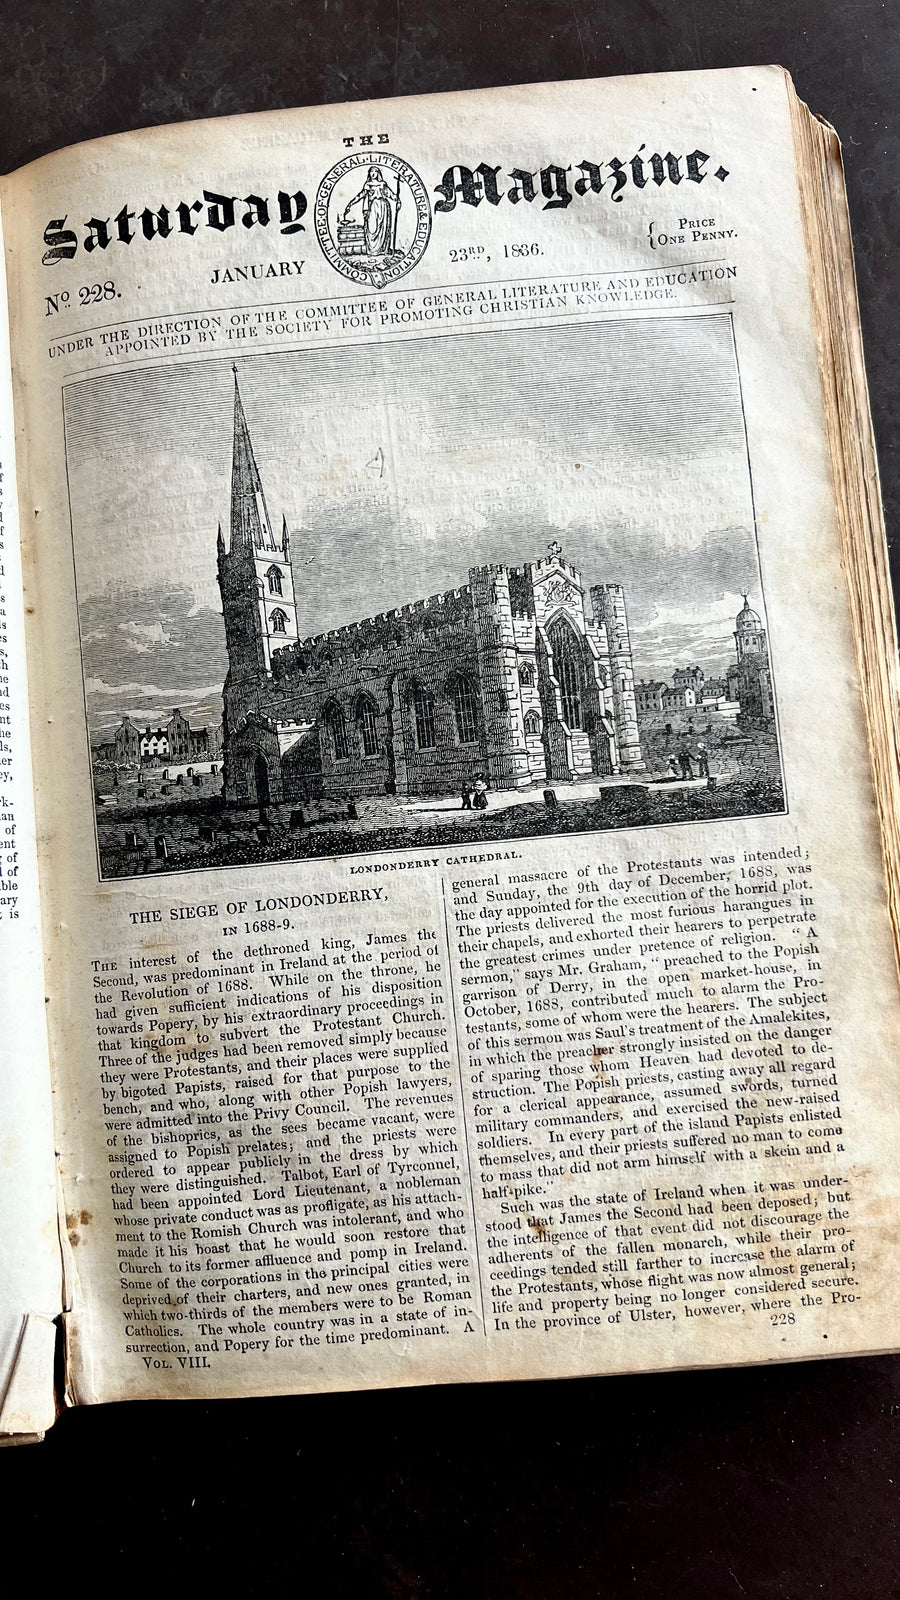 January-December 1836- London’s- The Saturday Magazine